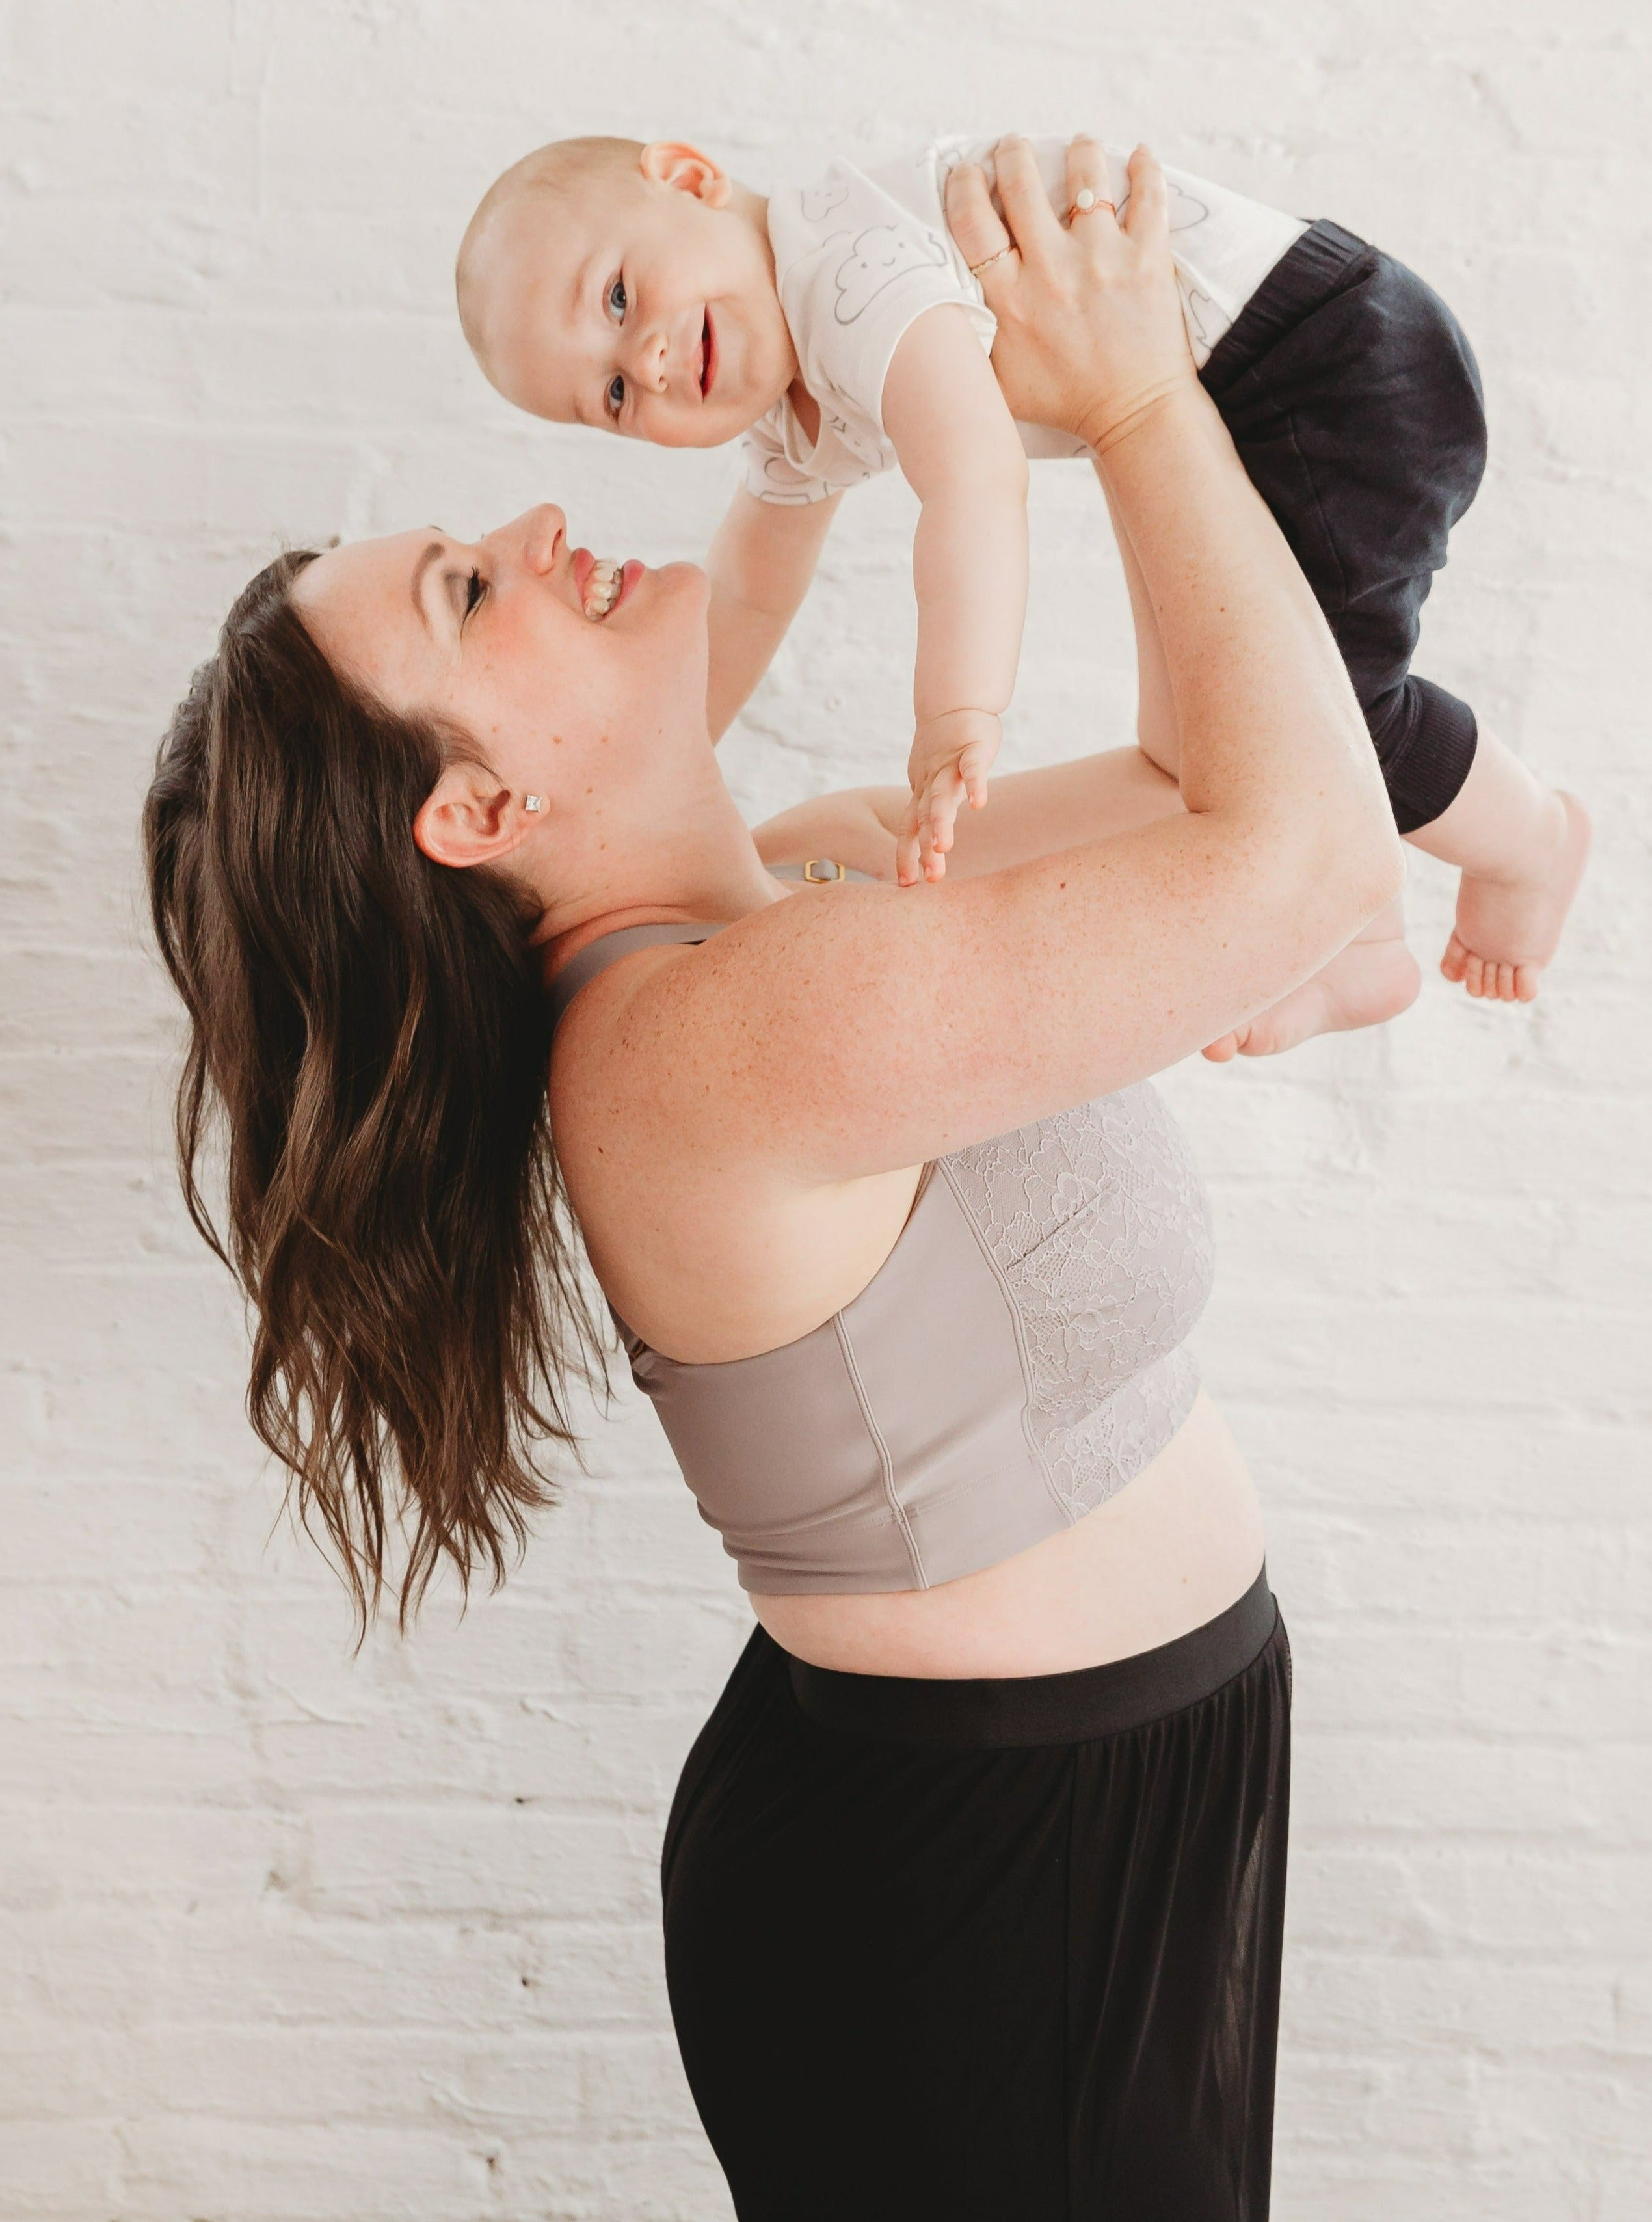 Premium Breastfeeding Bundle – Back to Mom